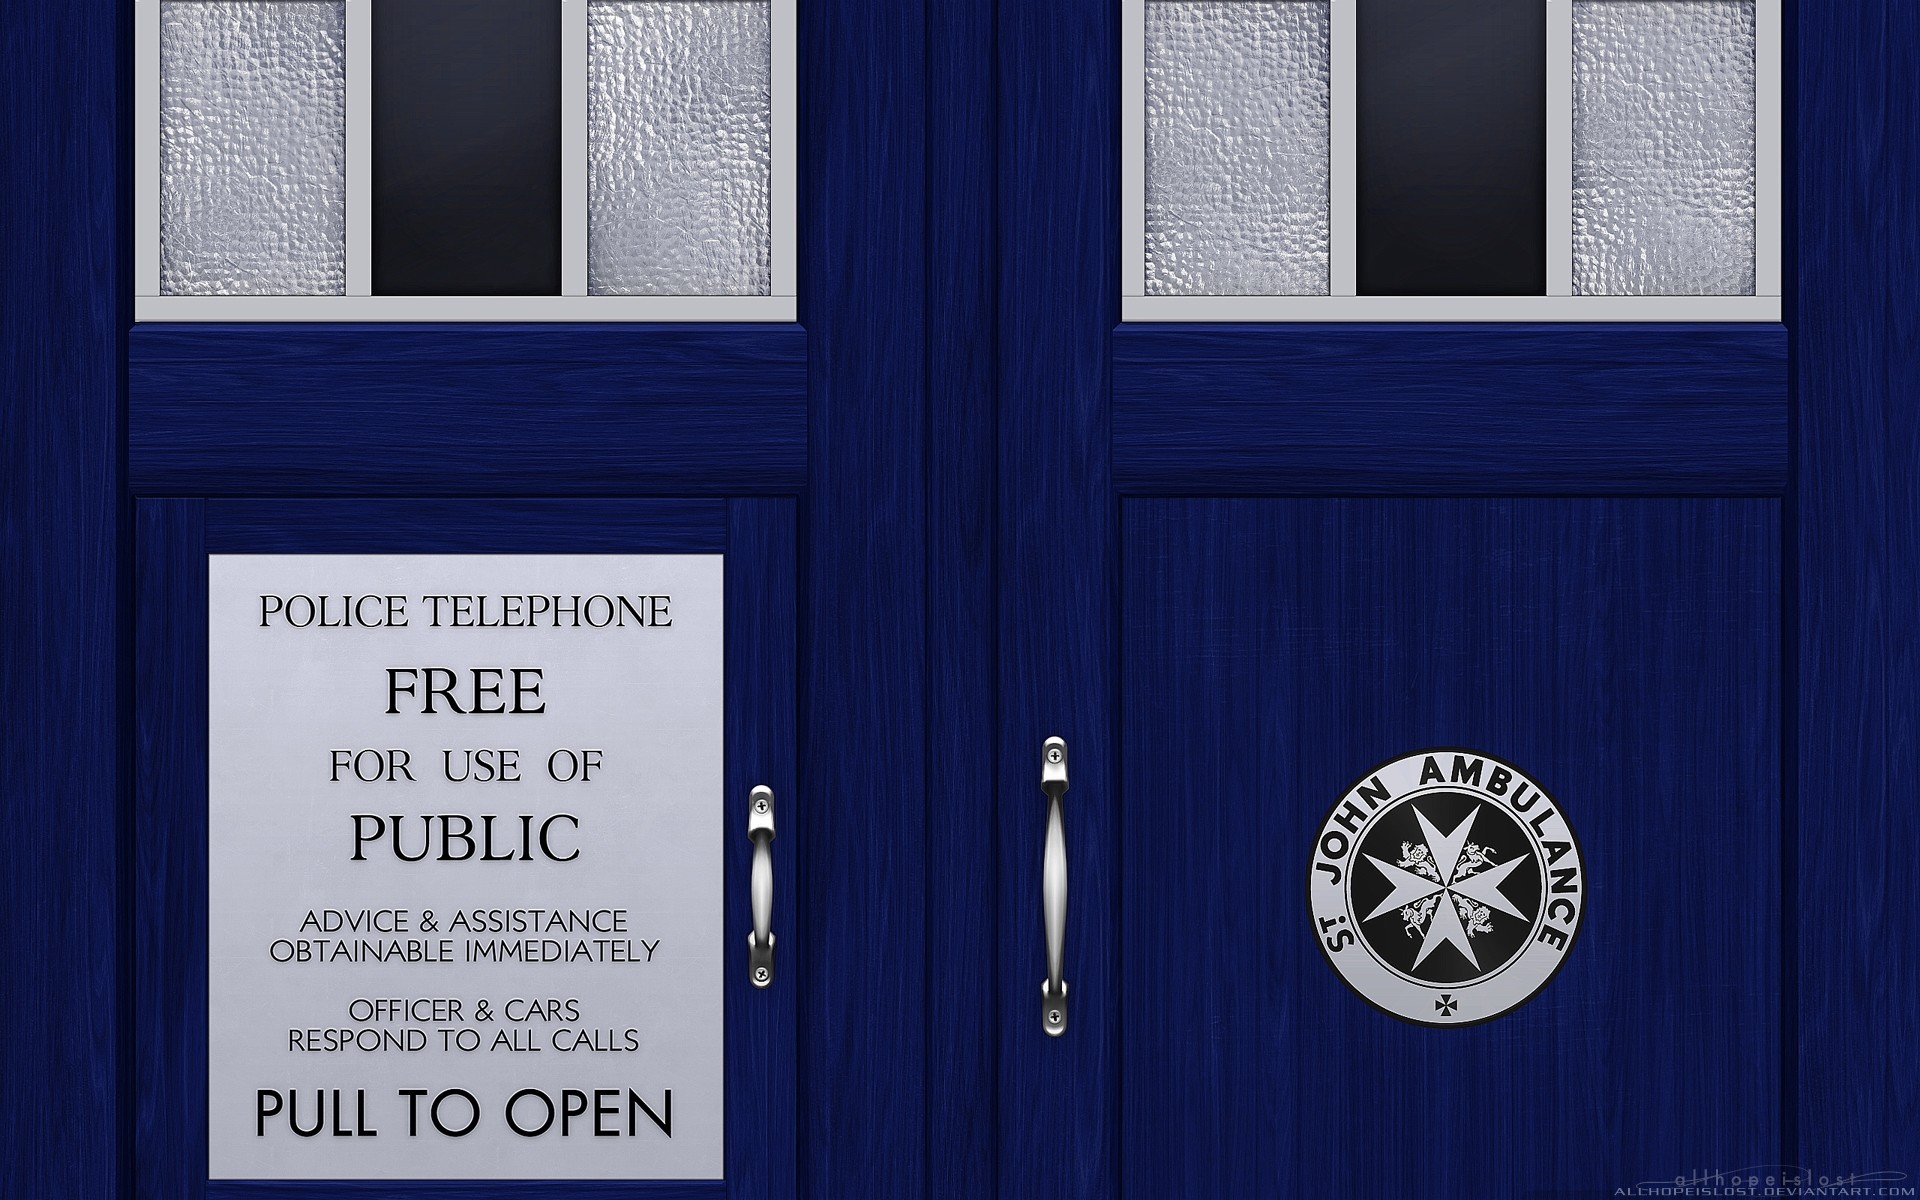 Doctor Who Tardis Wallpaper Iphone 32 1120Ã600@2x